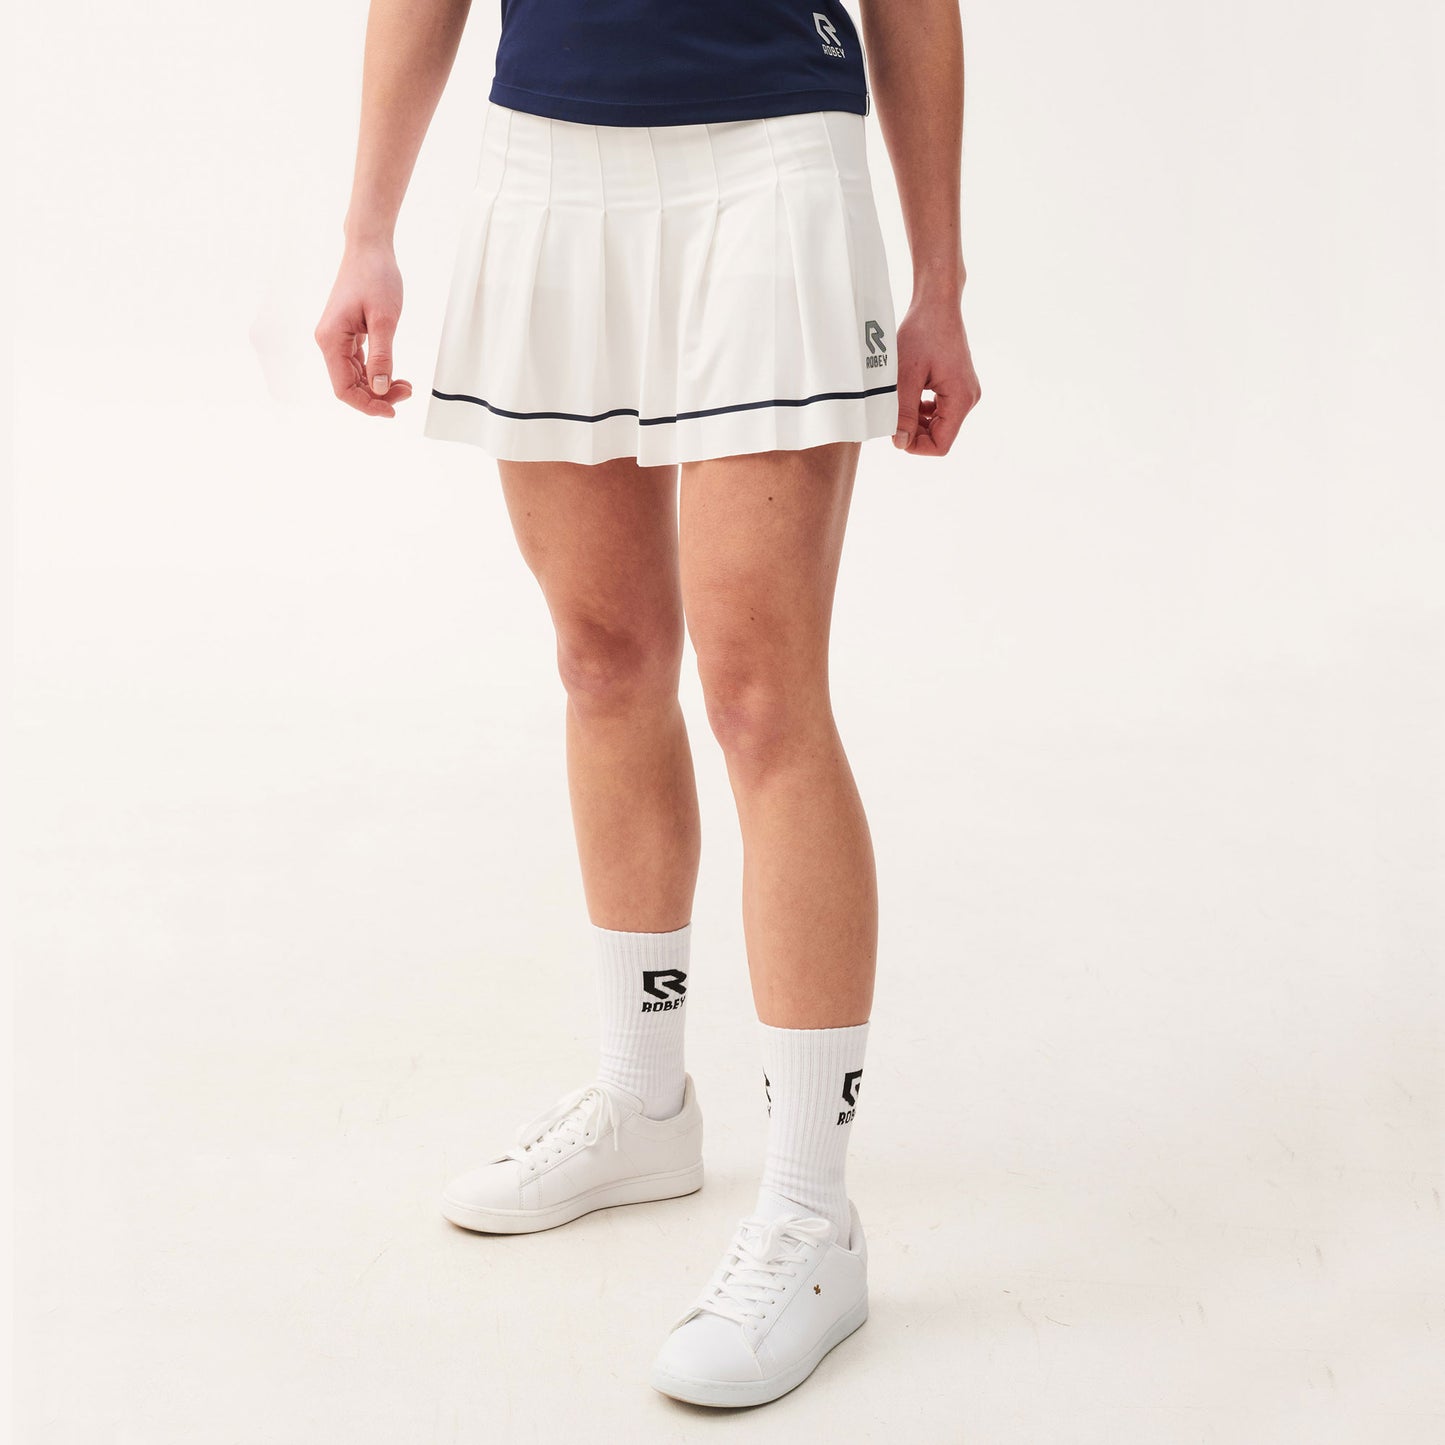 Robey Break Women's Pleated Tennis Skirt White (1)